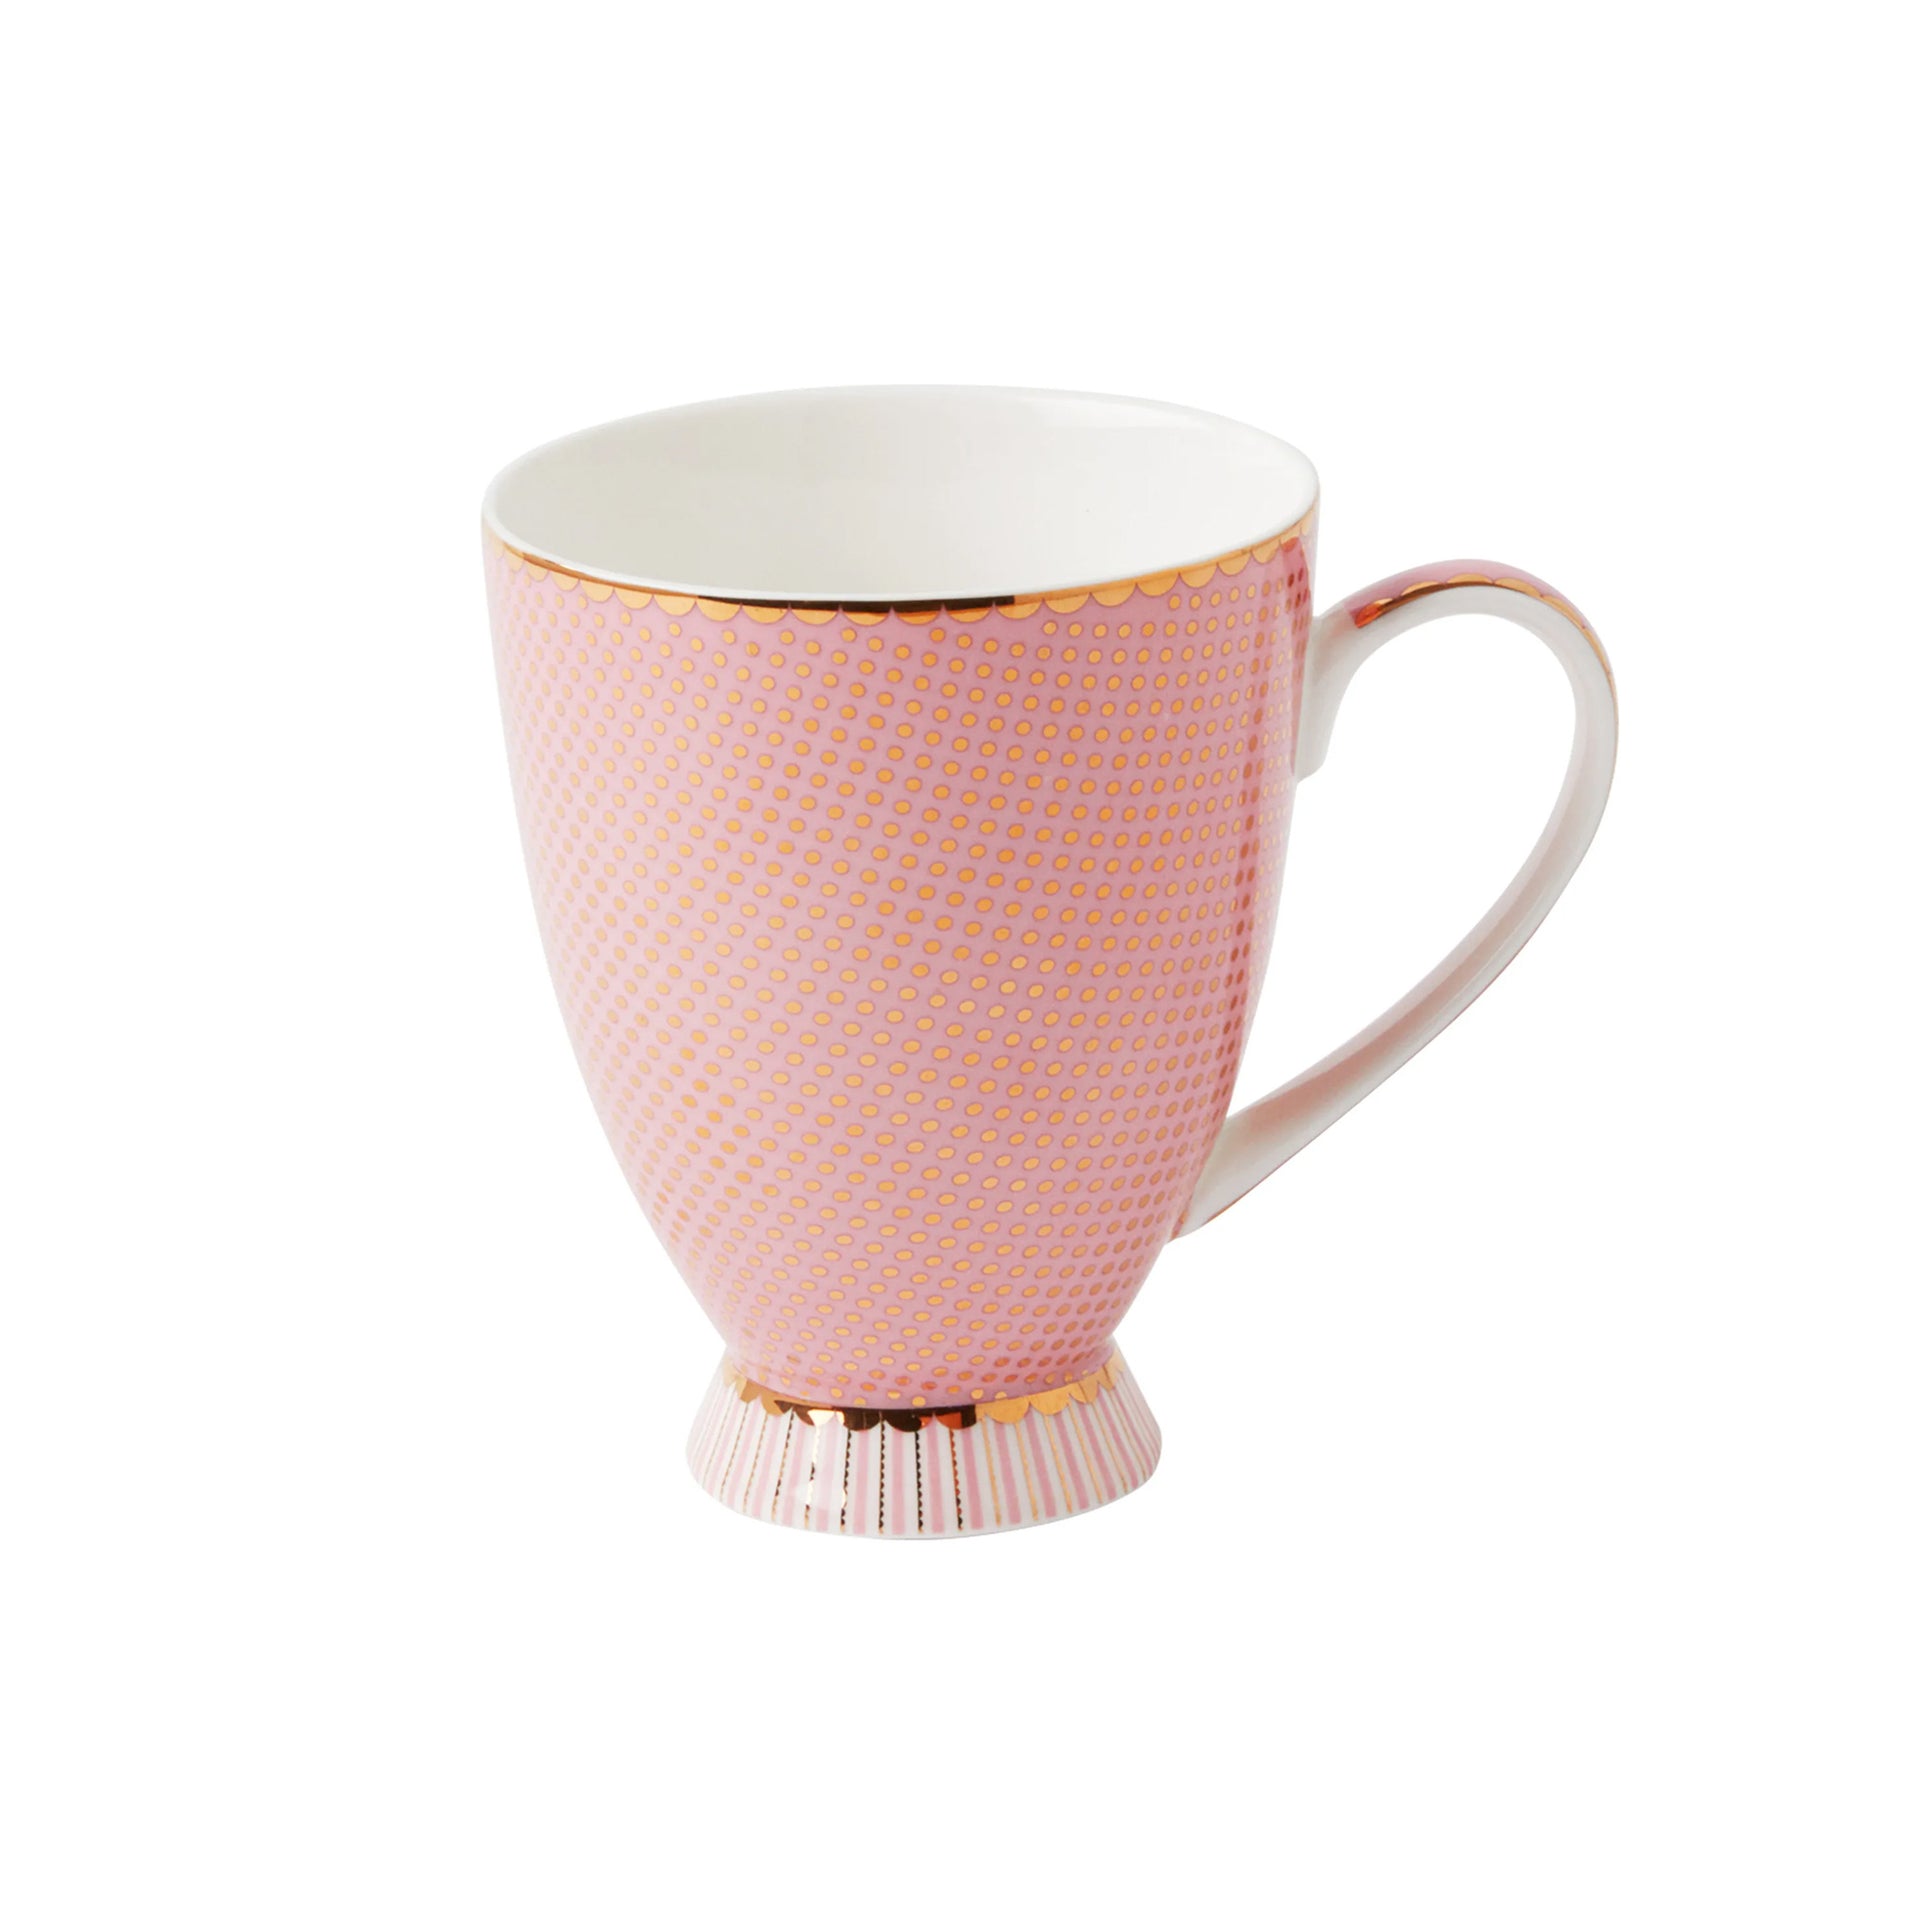 PIRMU Mug 360 ml White Pink Porcelain Flowers Round Tea Mug